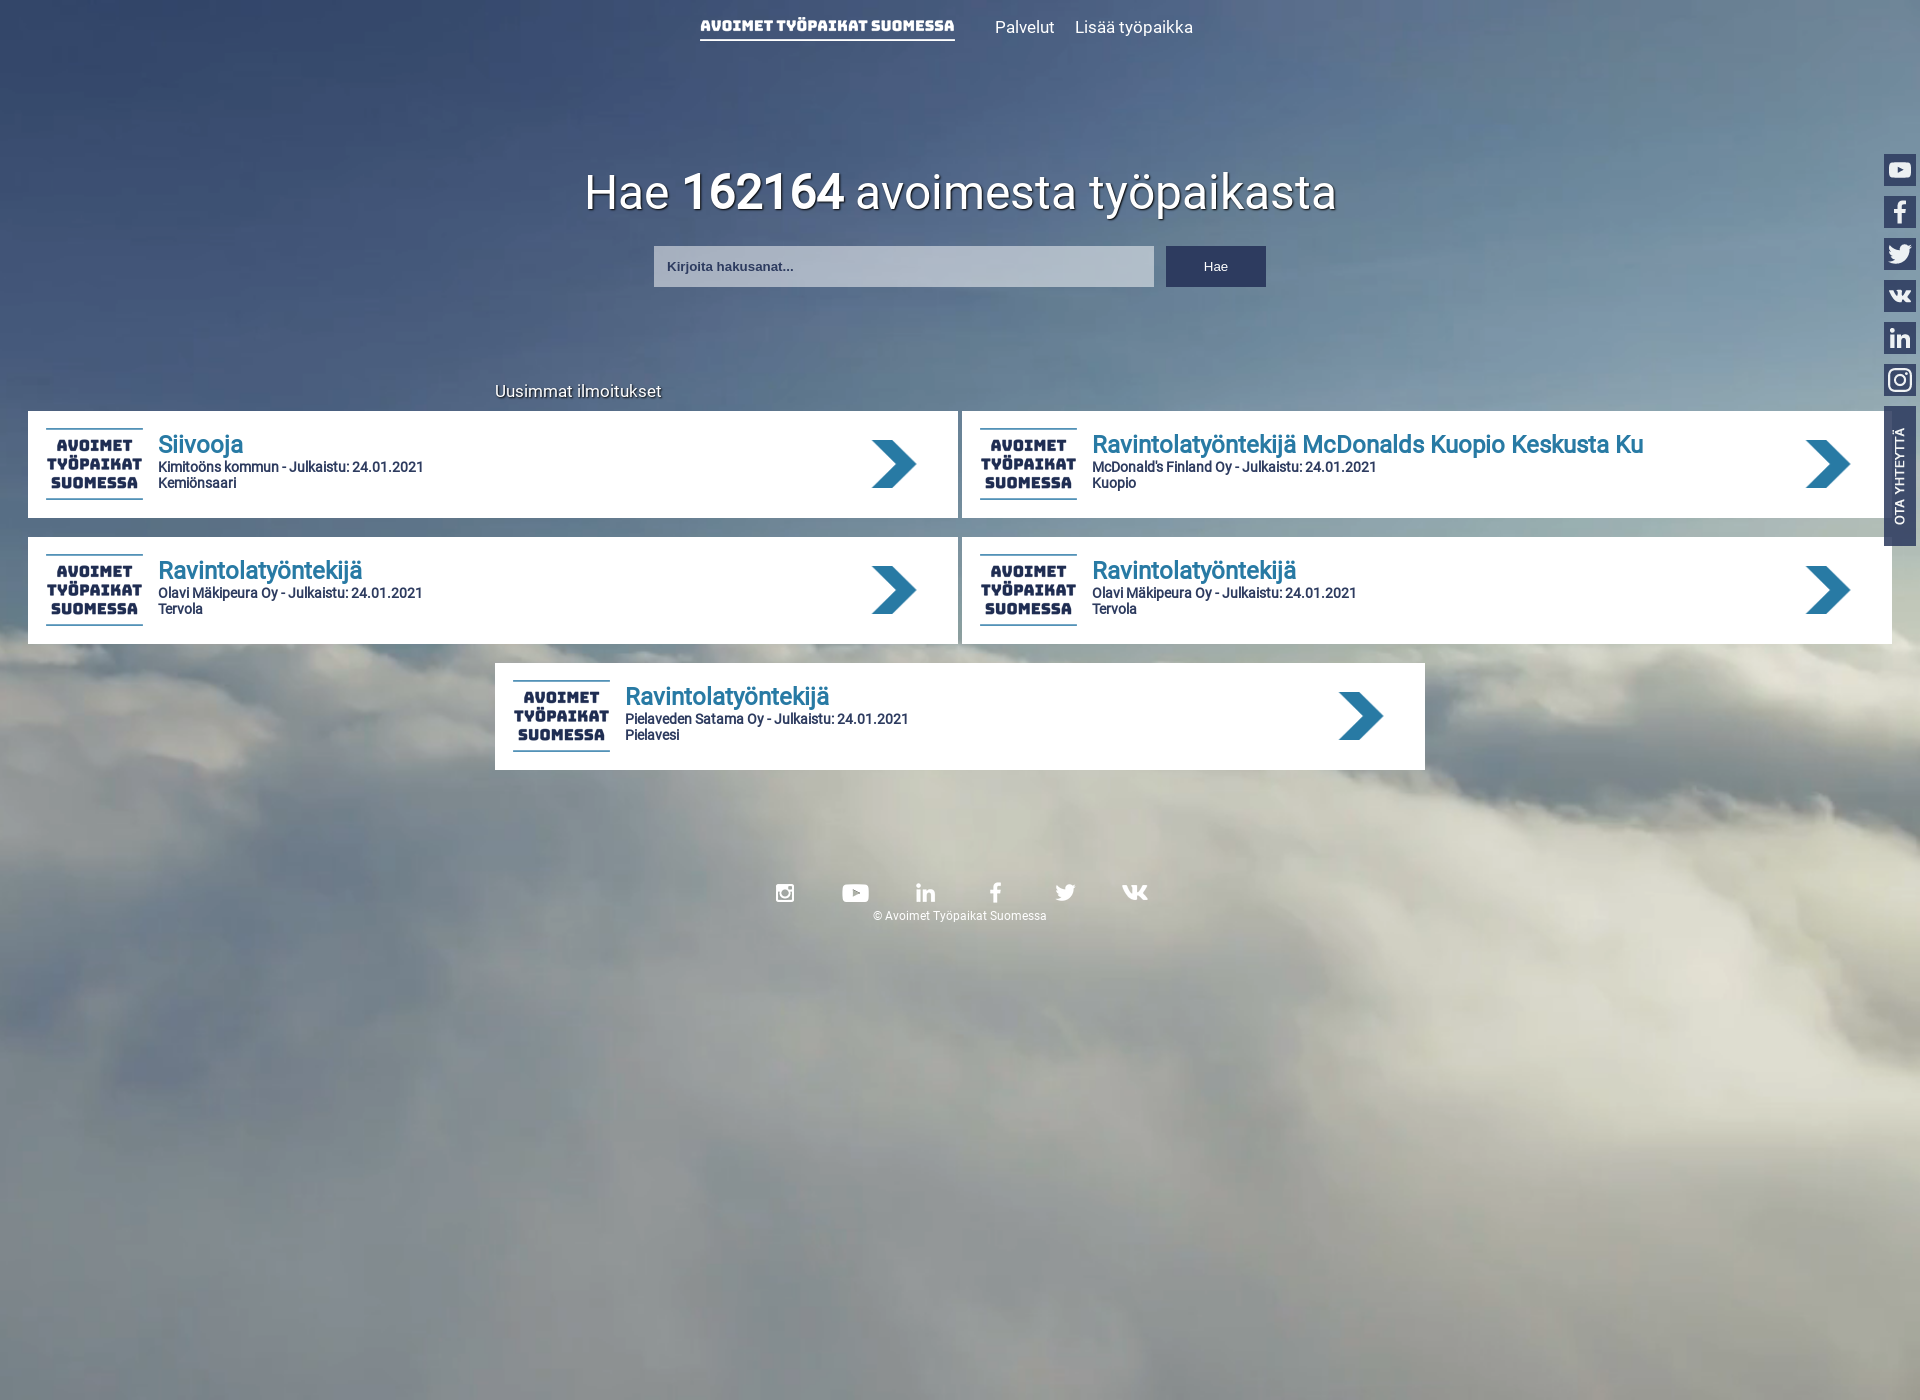 Skärmdump för avoimettyopaikatsuomessa.fi